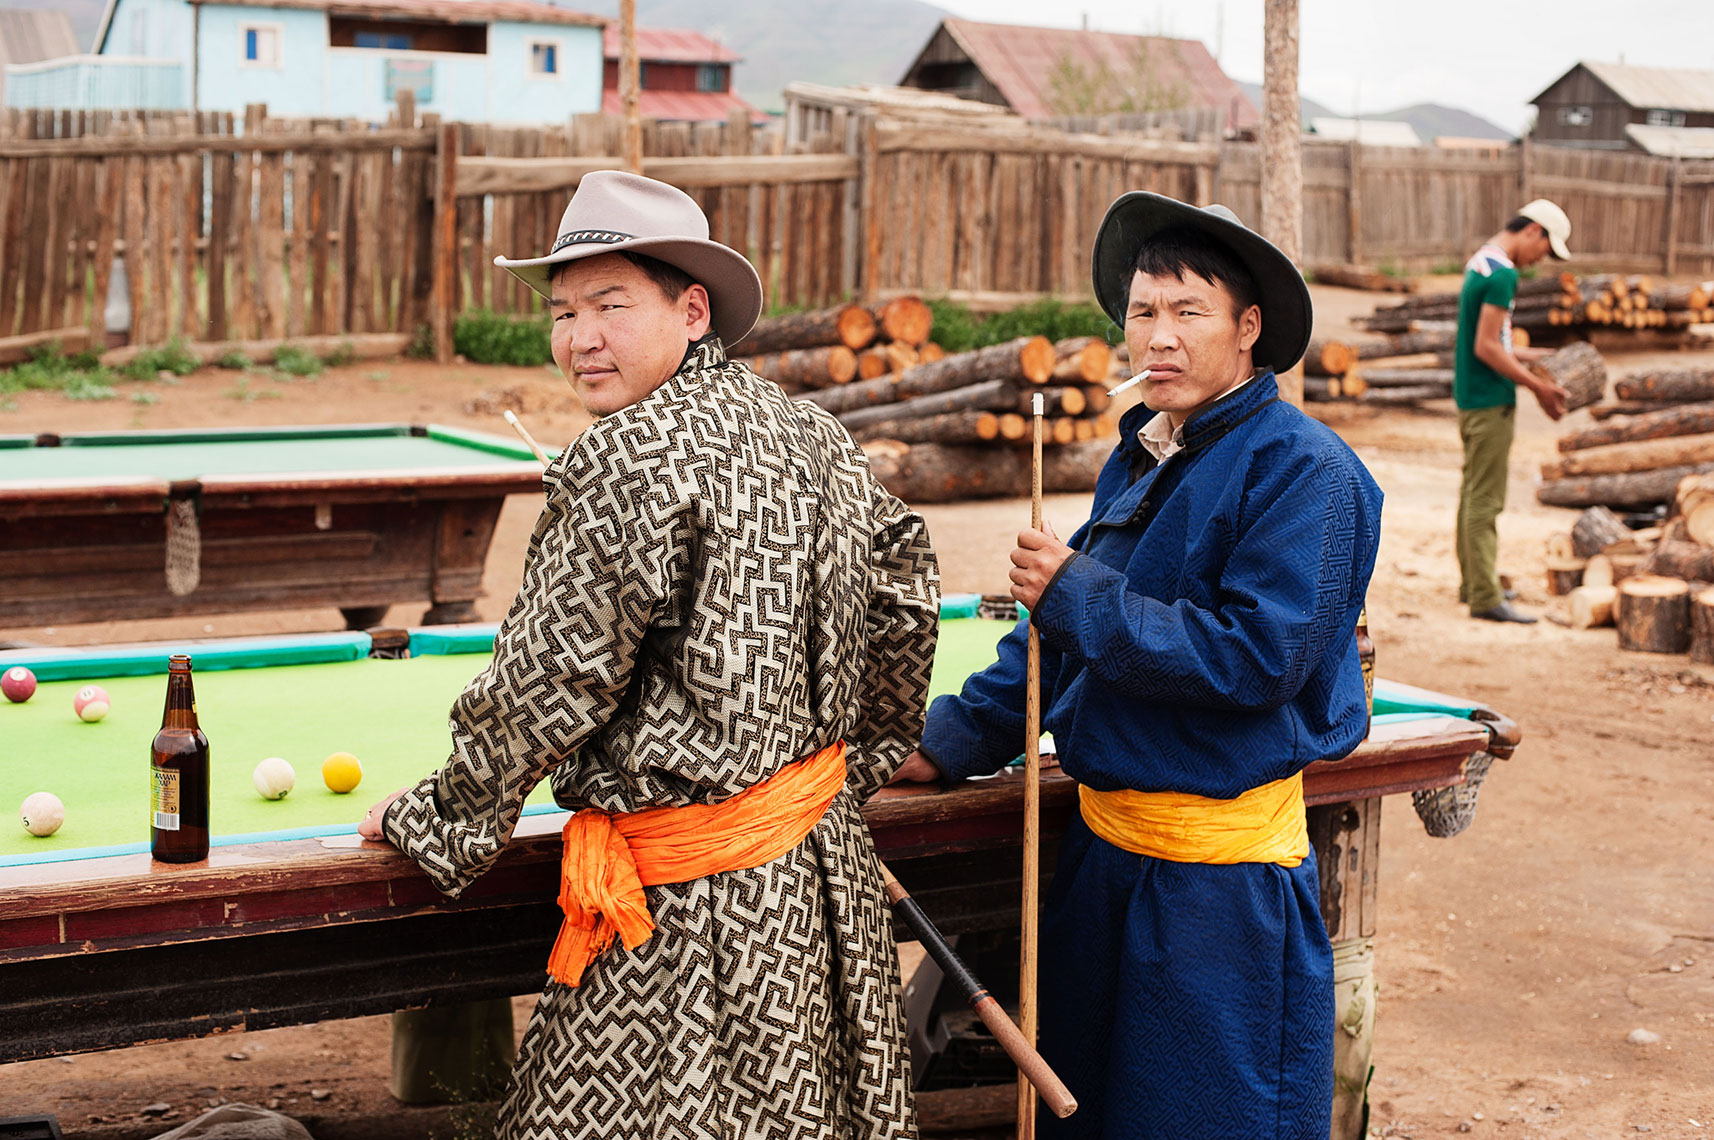 People Portraits Photography | Murun, Mongolia